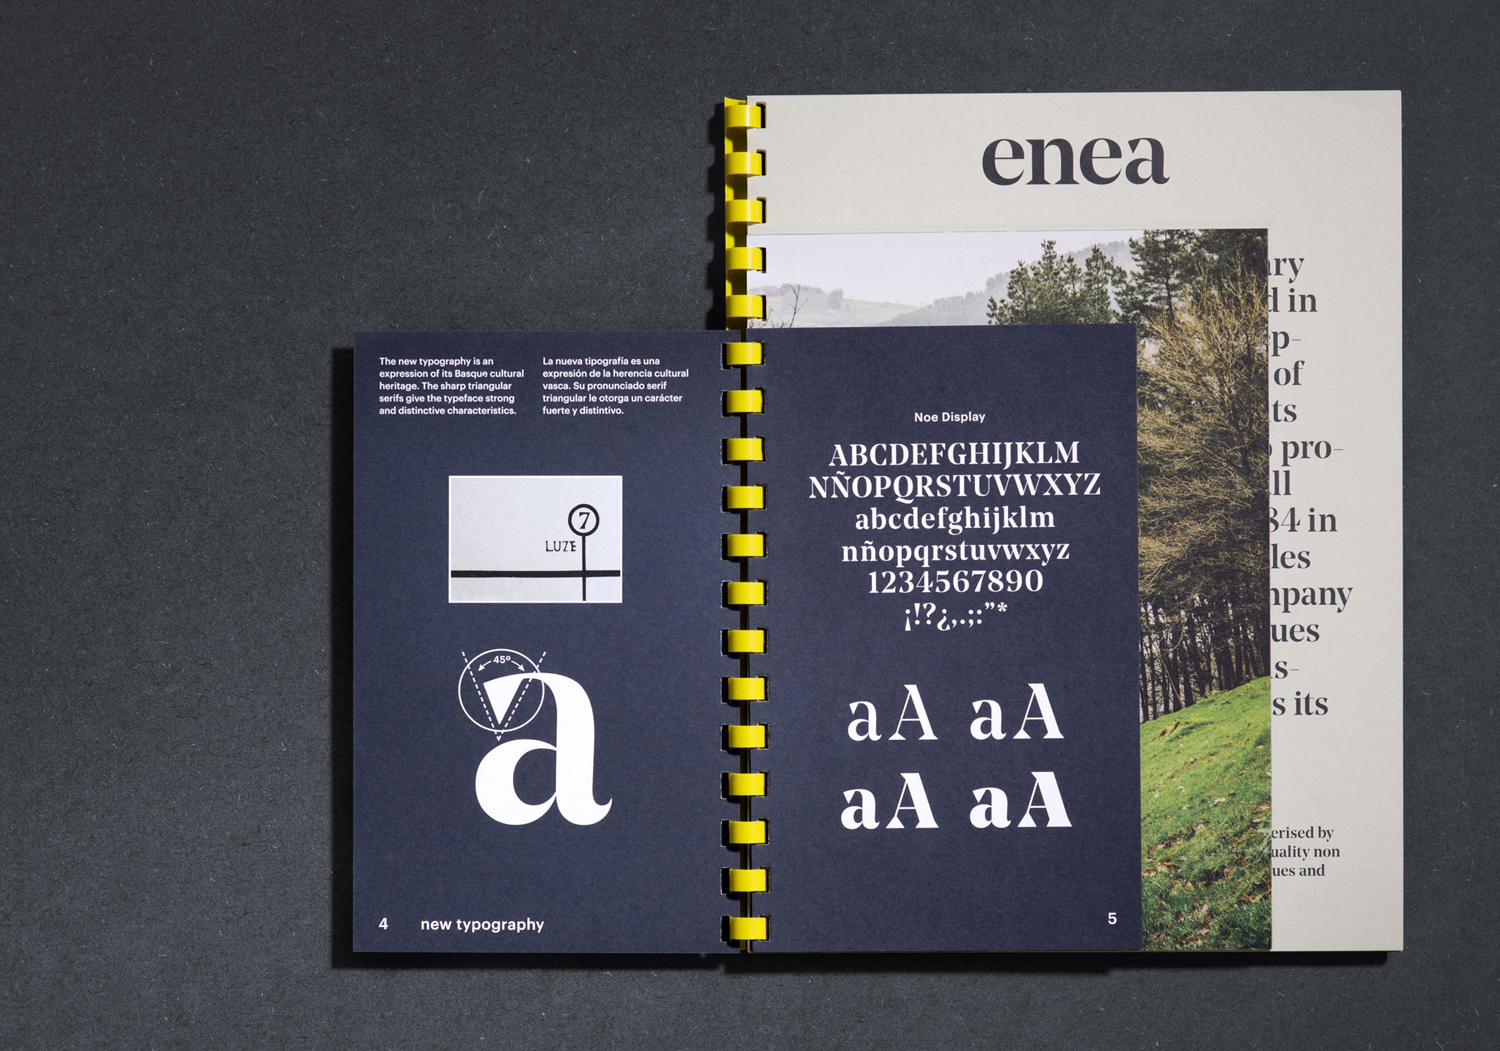 Inserts in Print – Enea by Close bcn, Spain